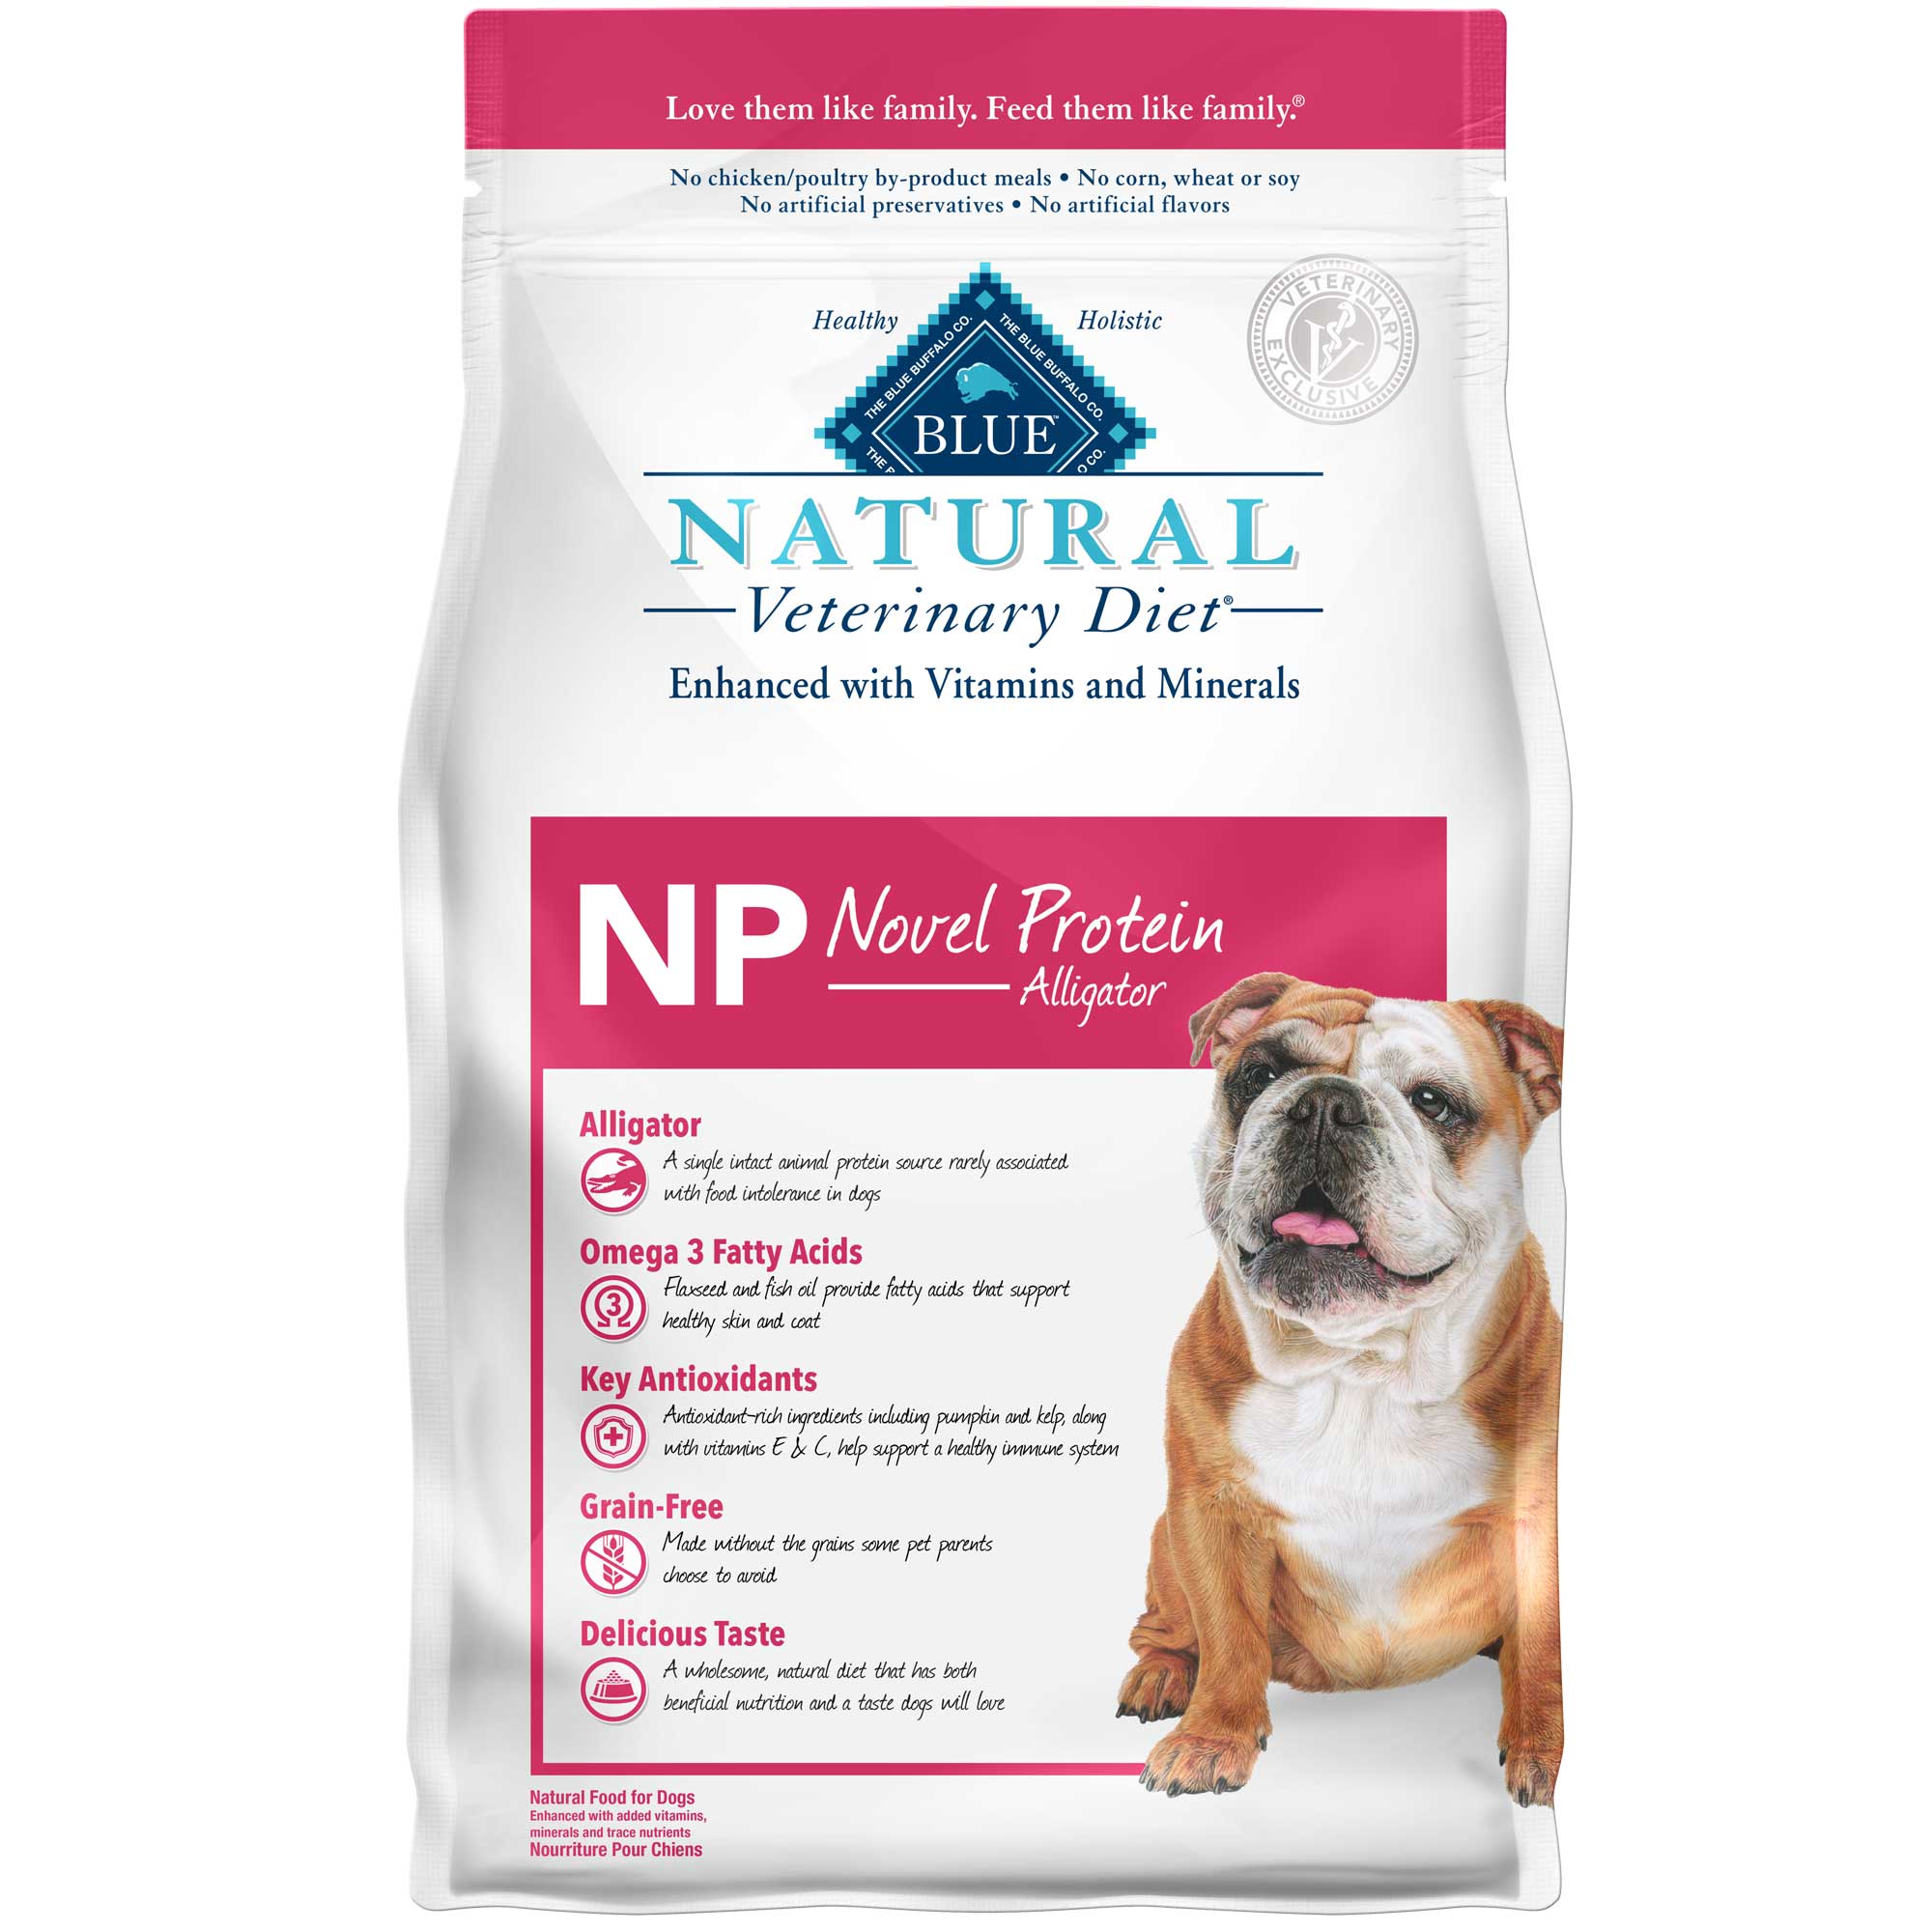 BLUE Natural Veterinary Diet NP Novel Protein-Alligator Grain-Free Dry Dog Food Usage